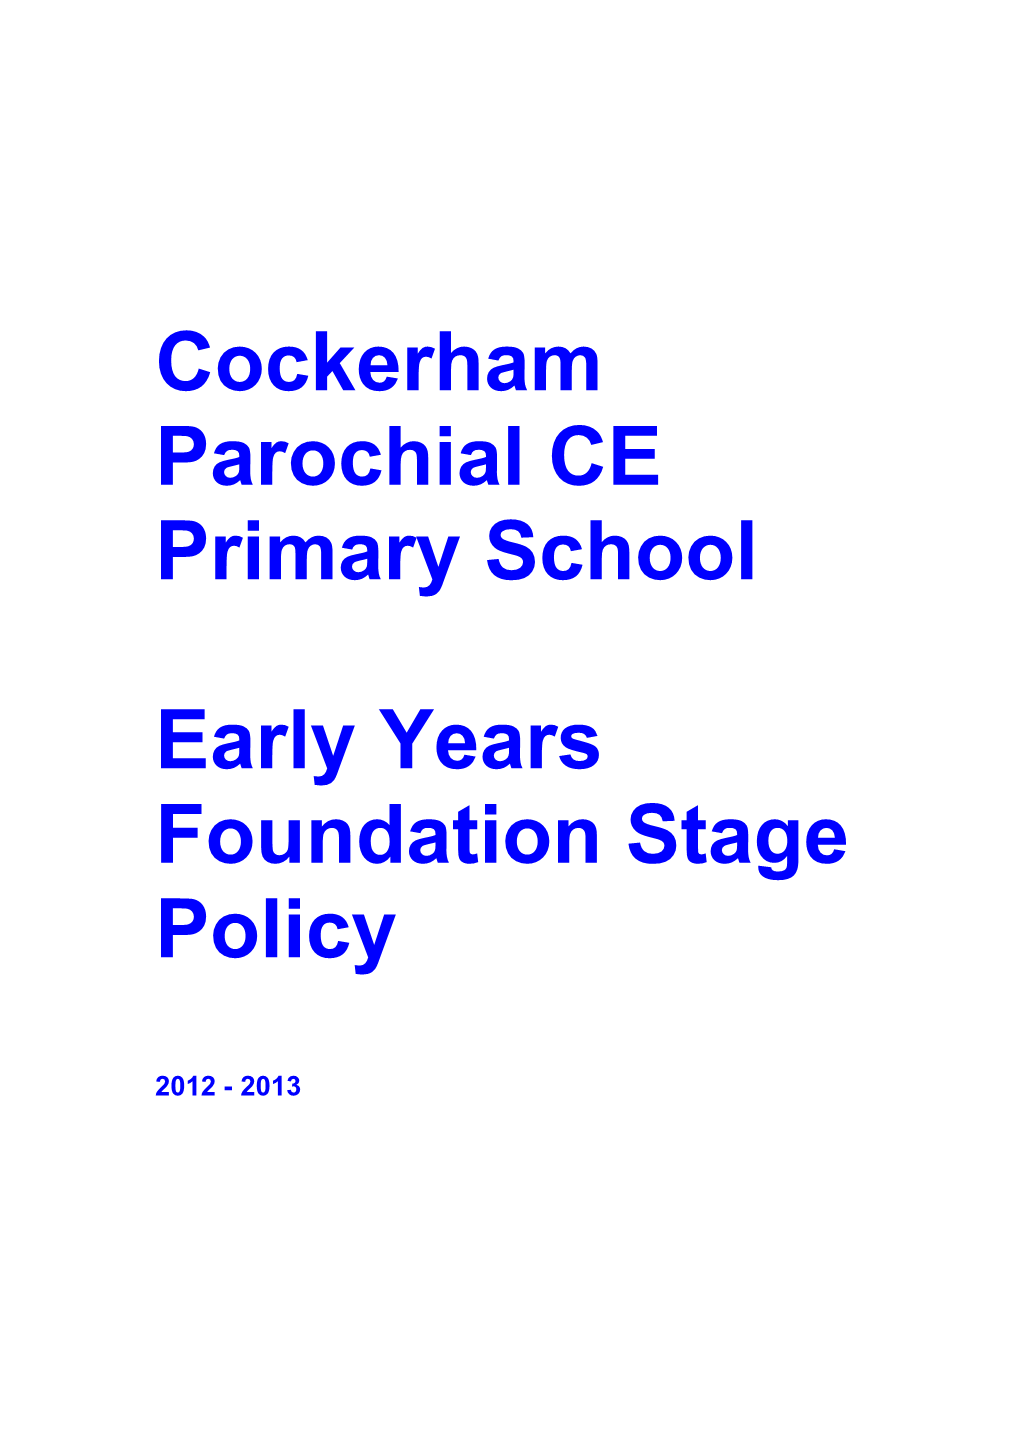 Cockerham Parochial CE Primary School